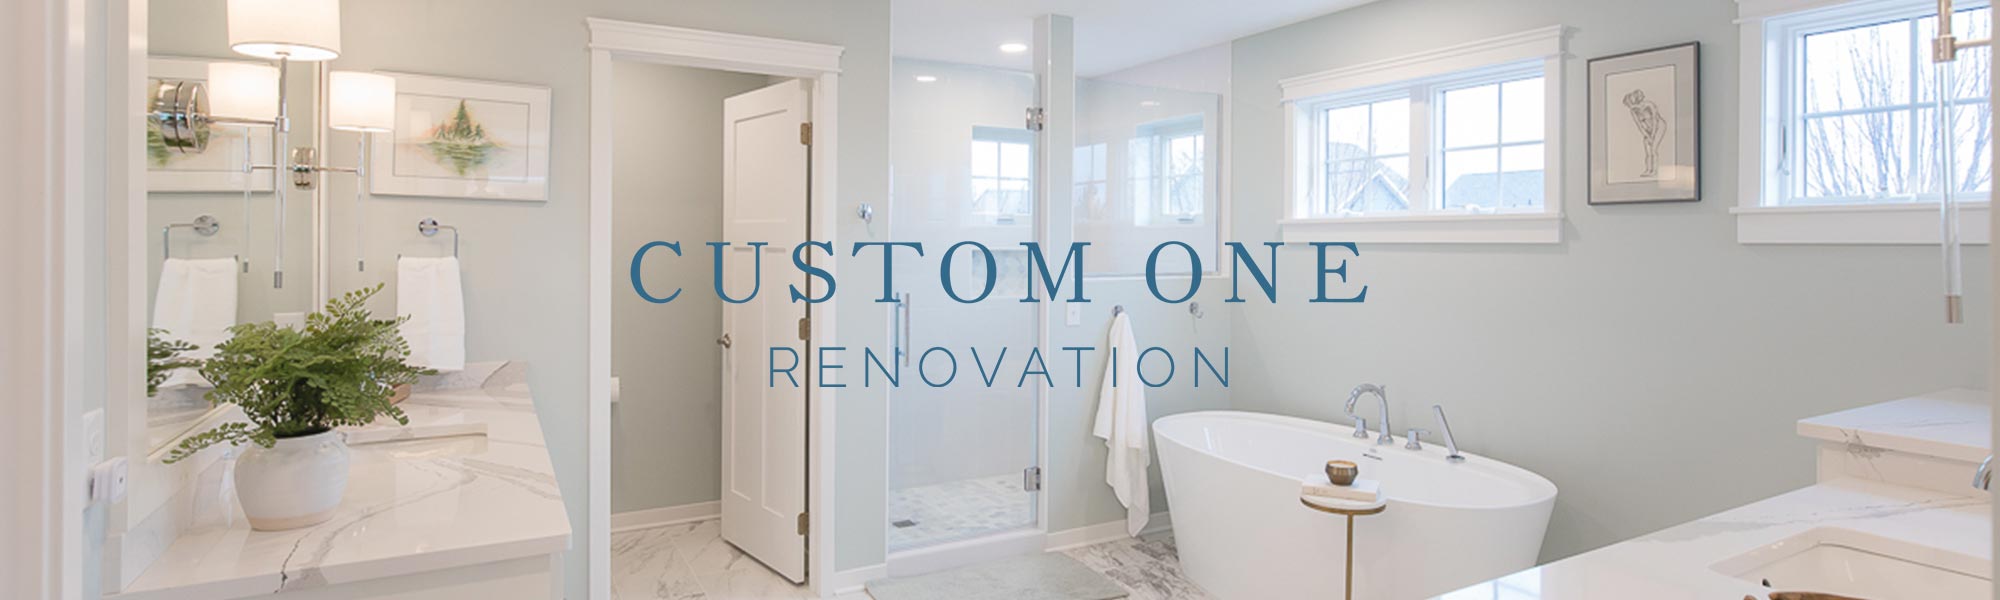 Master Bathroom Remodeling and Renovation